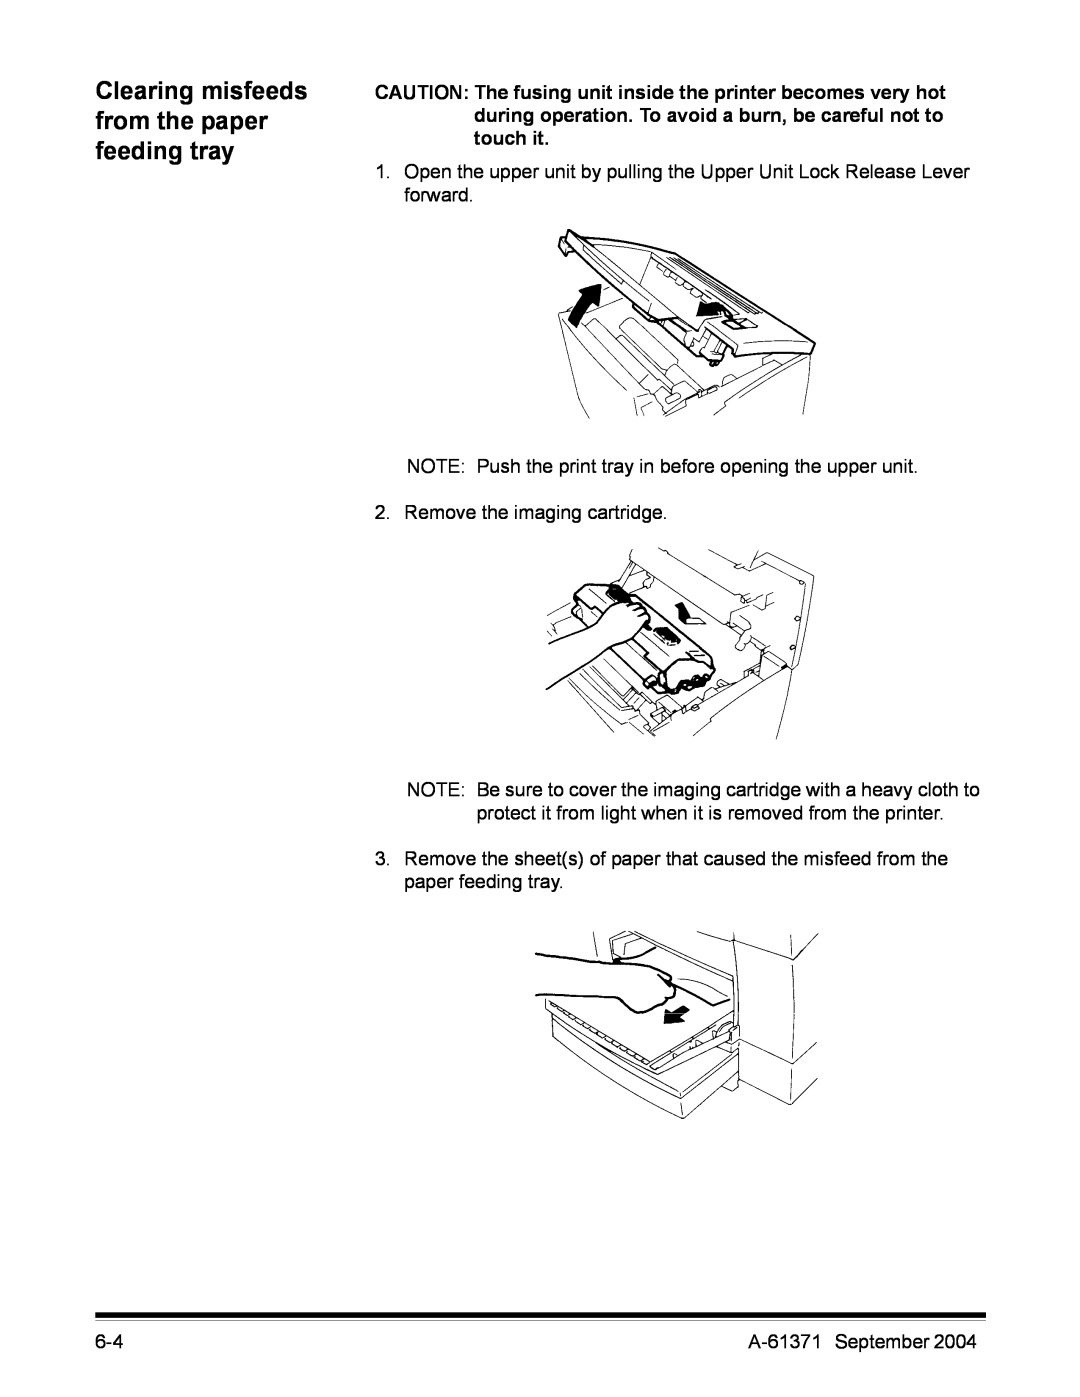 Kodak 3000DSV-E manual Clearing misfeeds from the paper feeding tray 